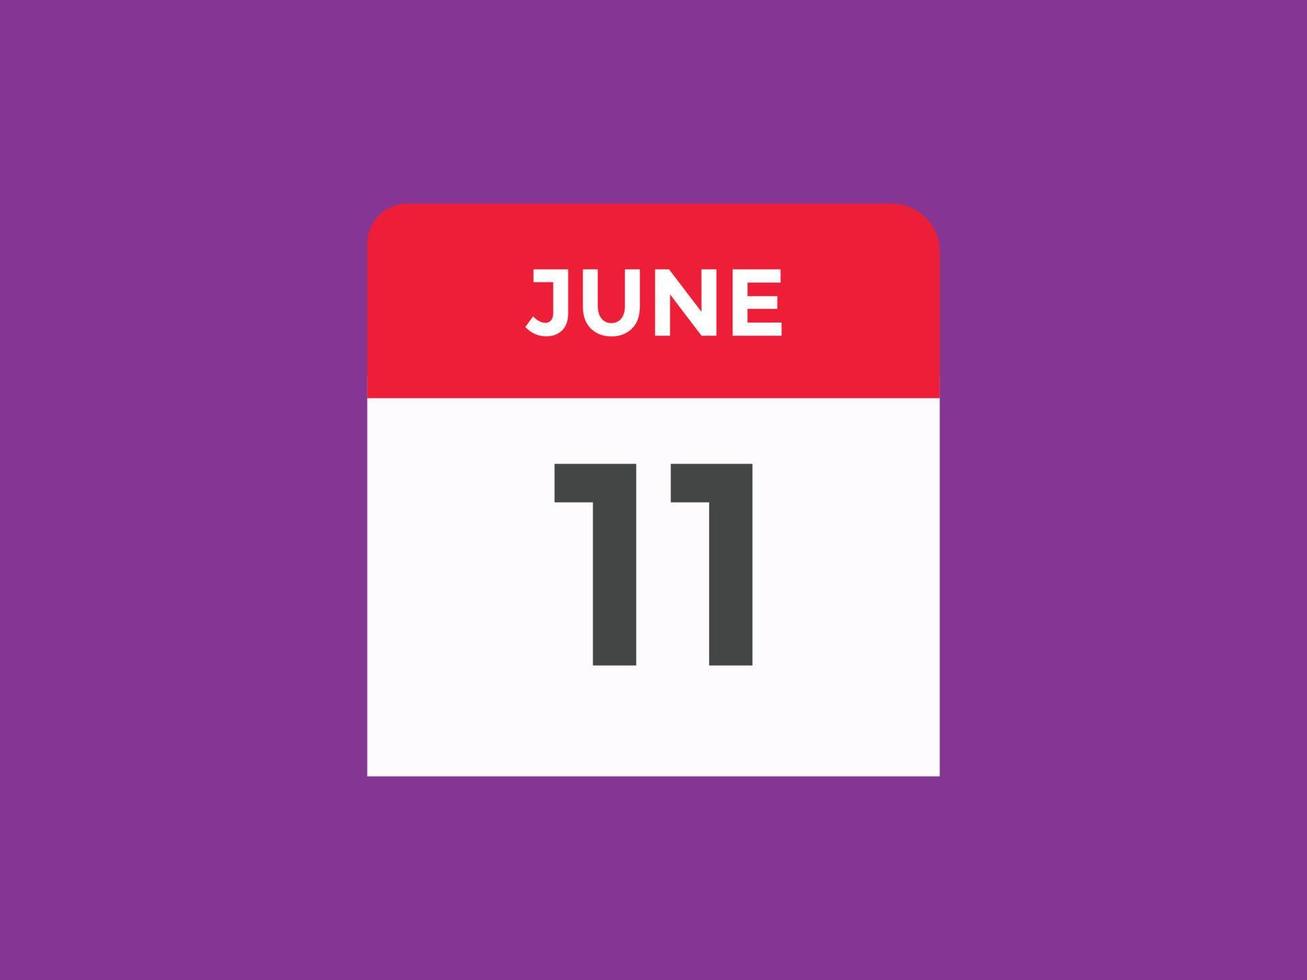 11. Juni Kalendererinnerung. 11. juni tägliche kalendersymbolvorlage. Kalender 11. Juni Icon-Design-Vorlage. Vektor-Illustration vektor